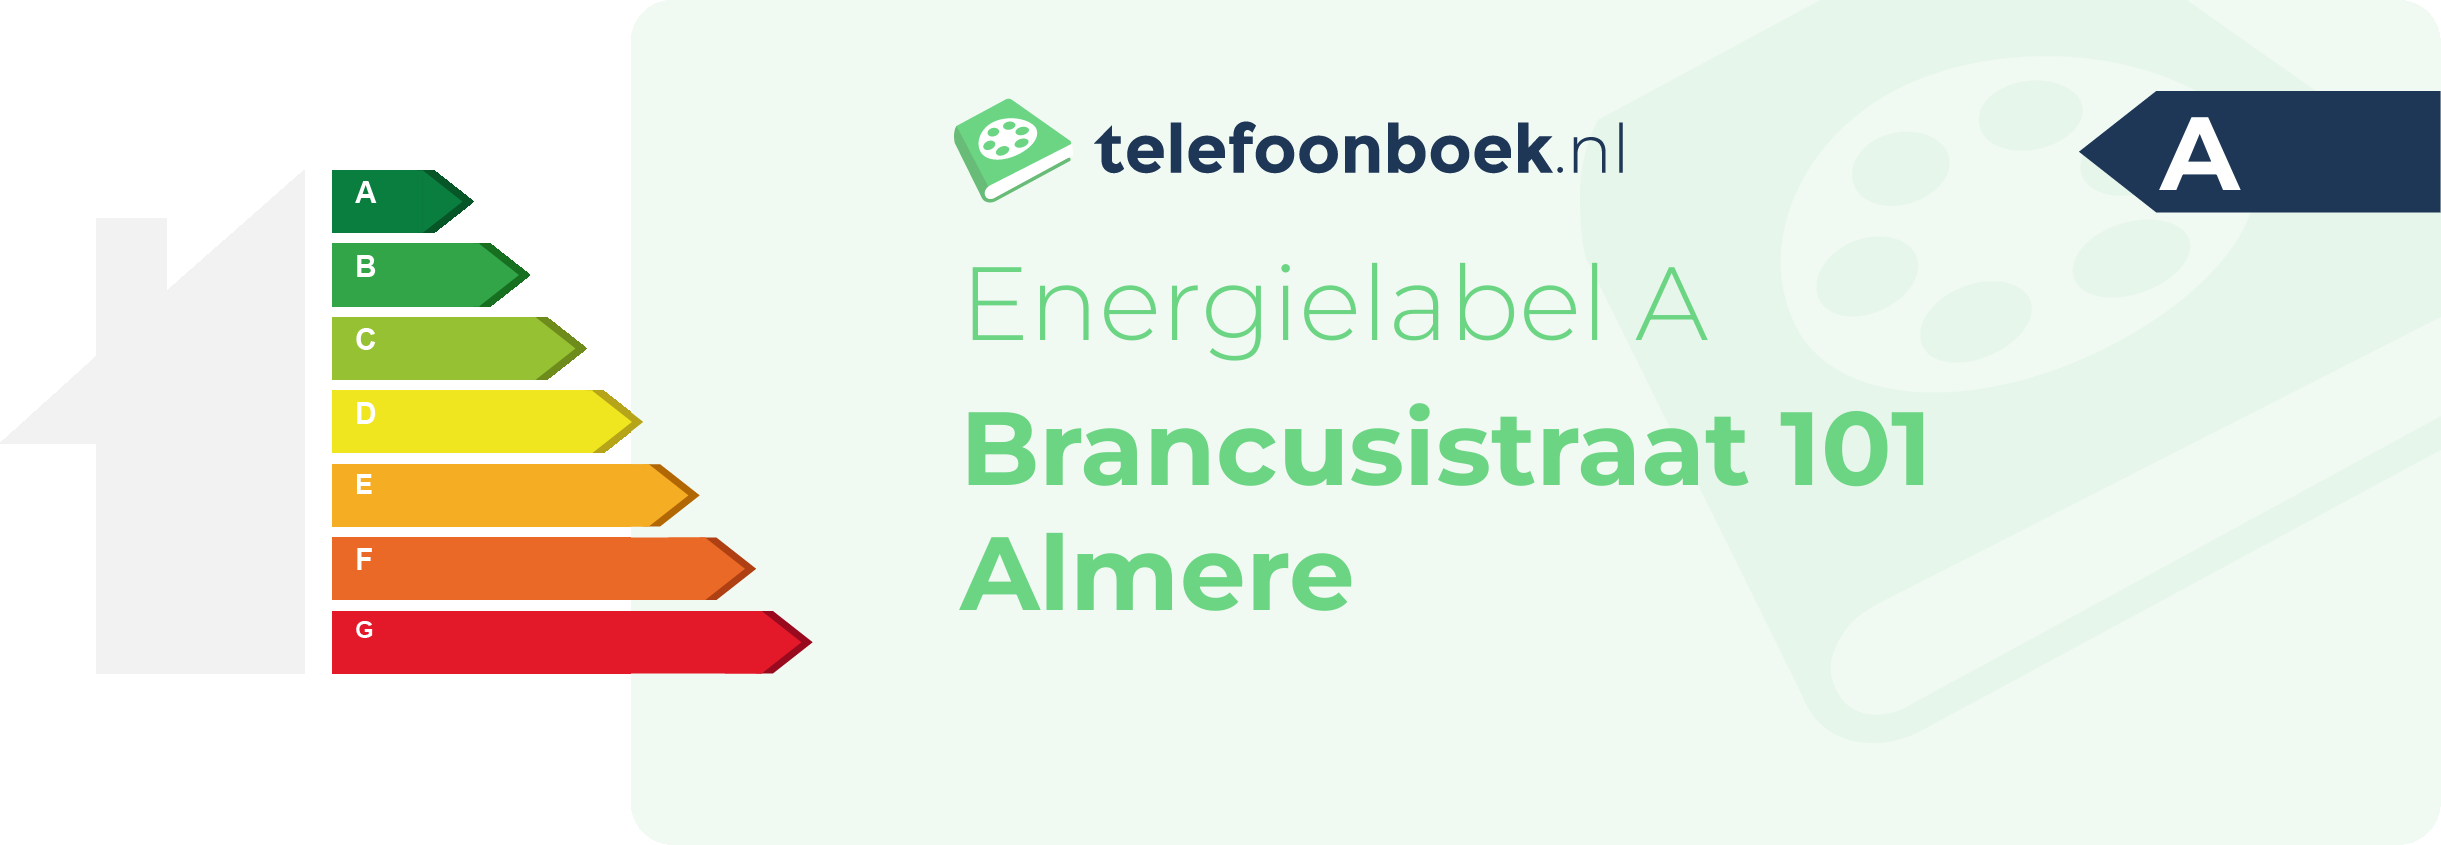 Energielabel Brancusistraat 101 Almere